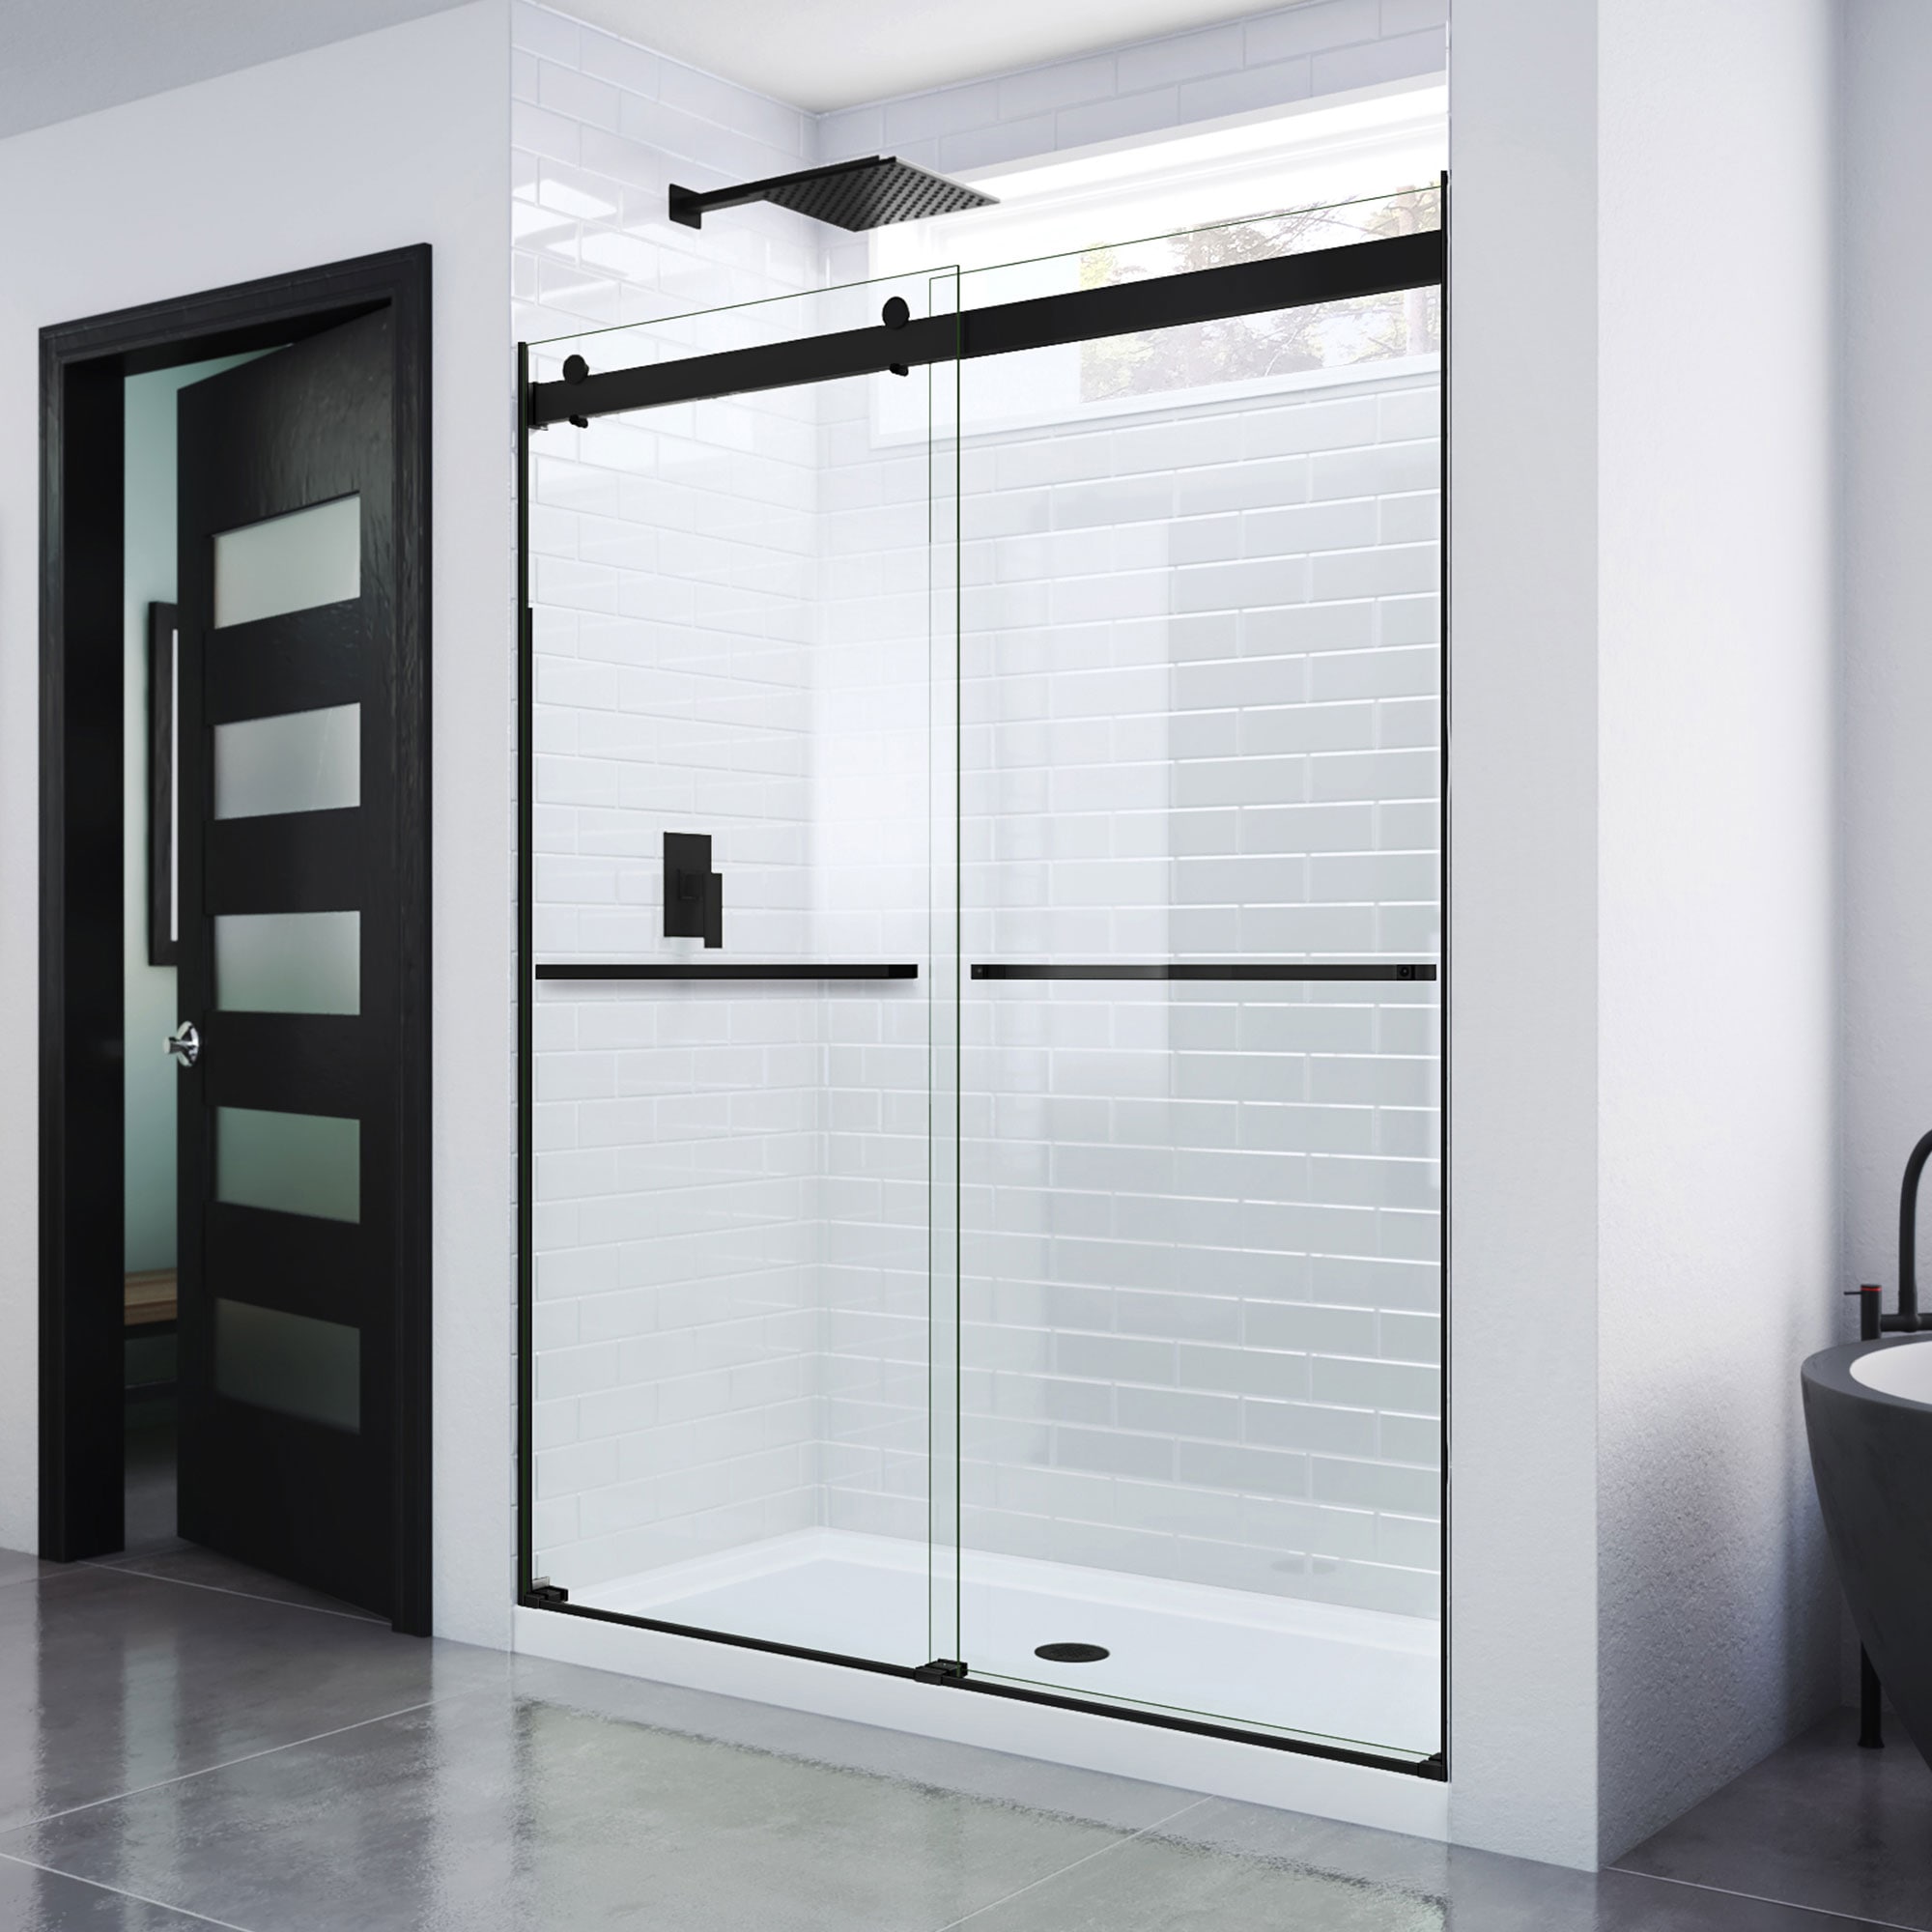 2Pcs Window Glass Shower Door Replacement Squeegee Rubber 11.81 Black -  Bed Bath & Beyond - 35515946